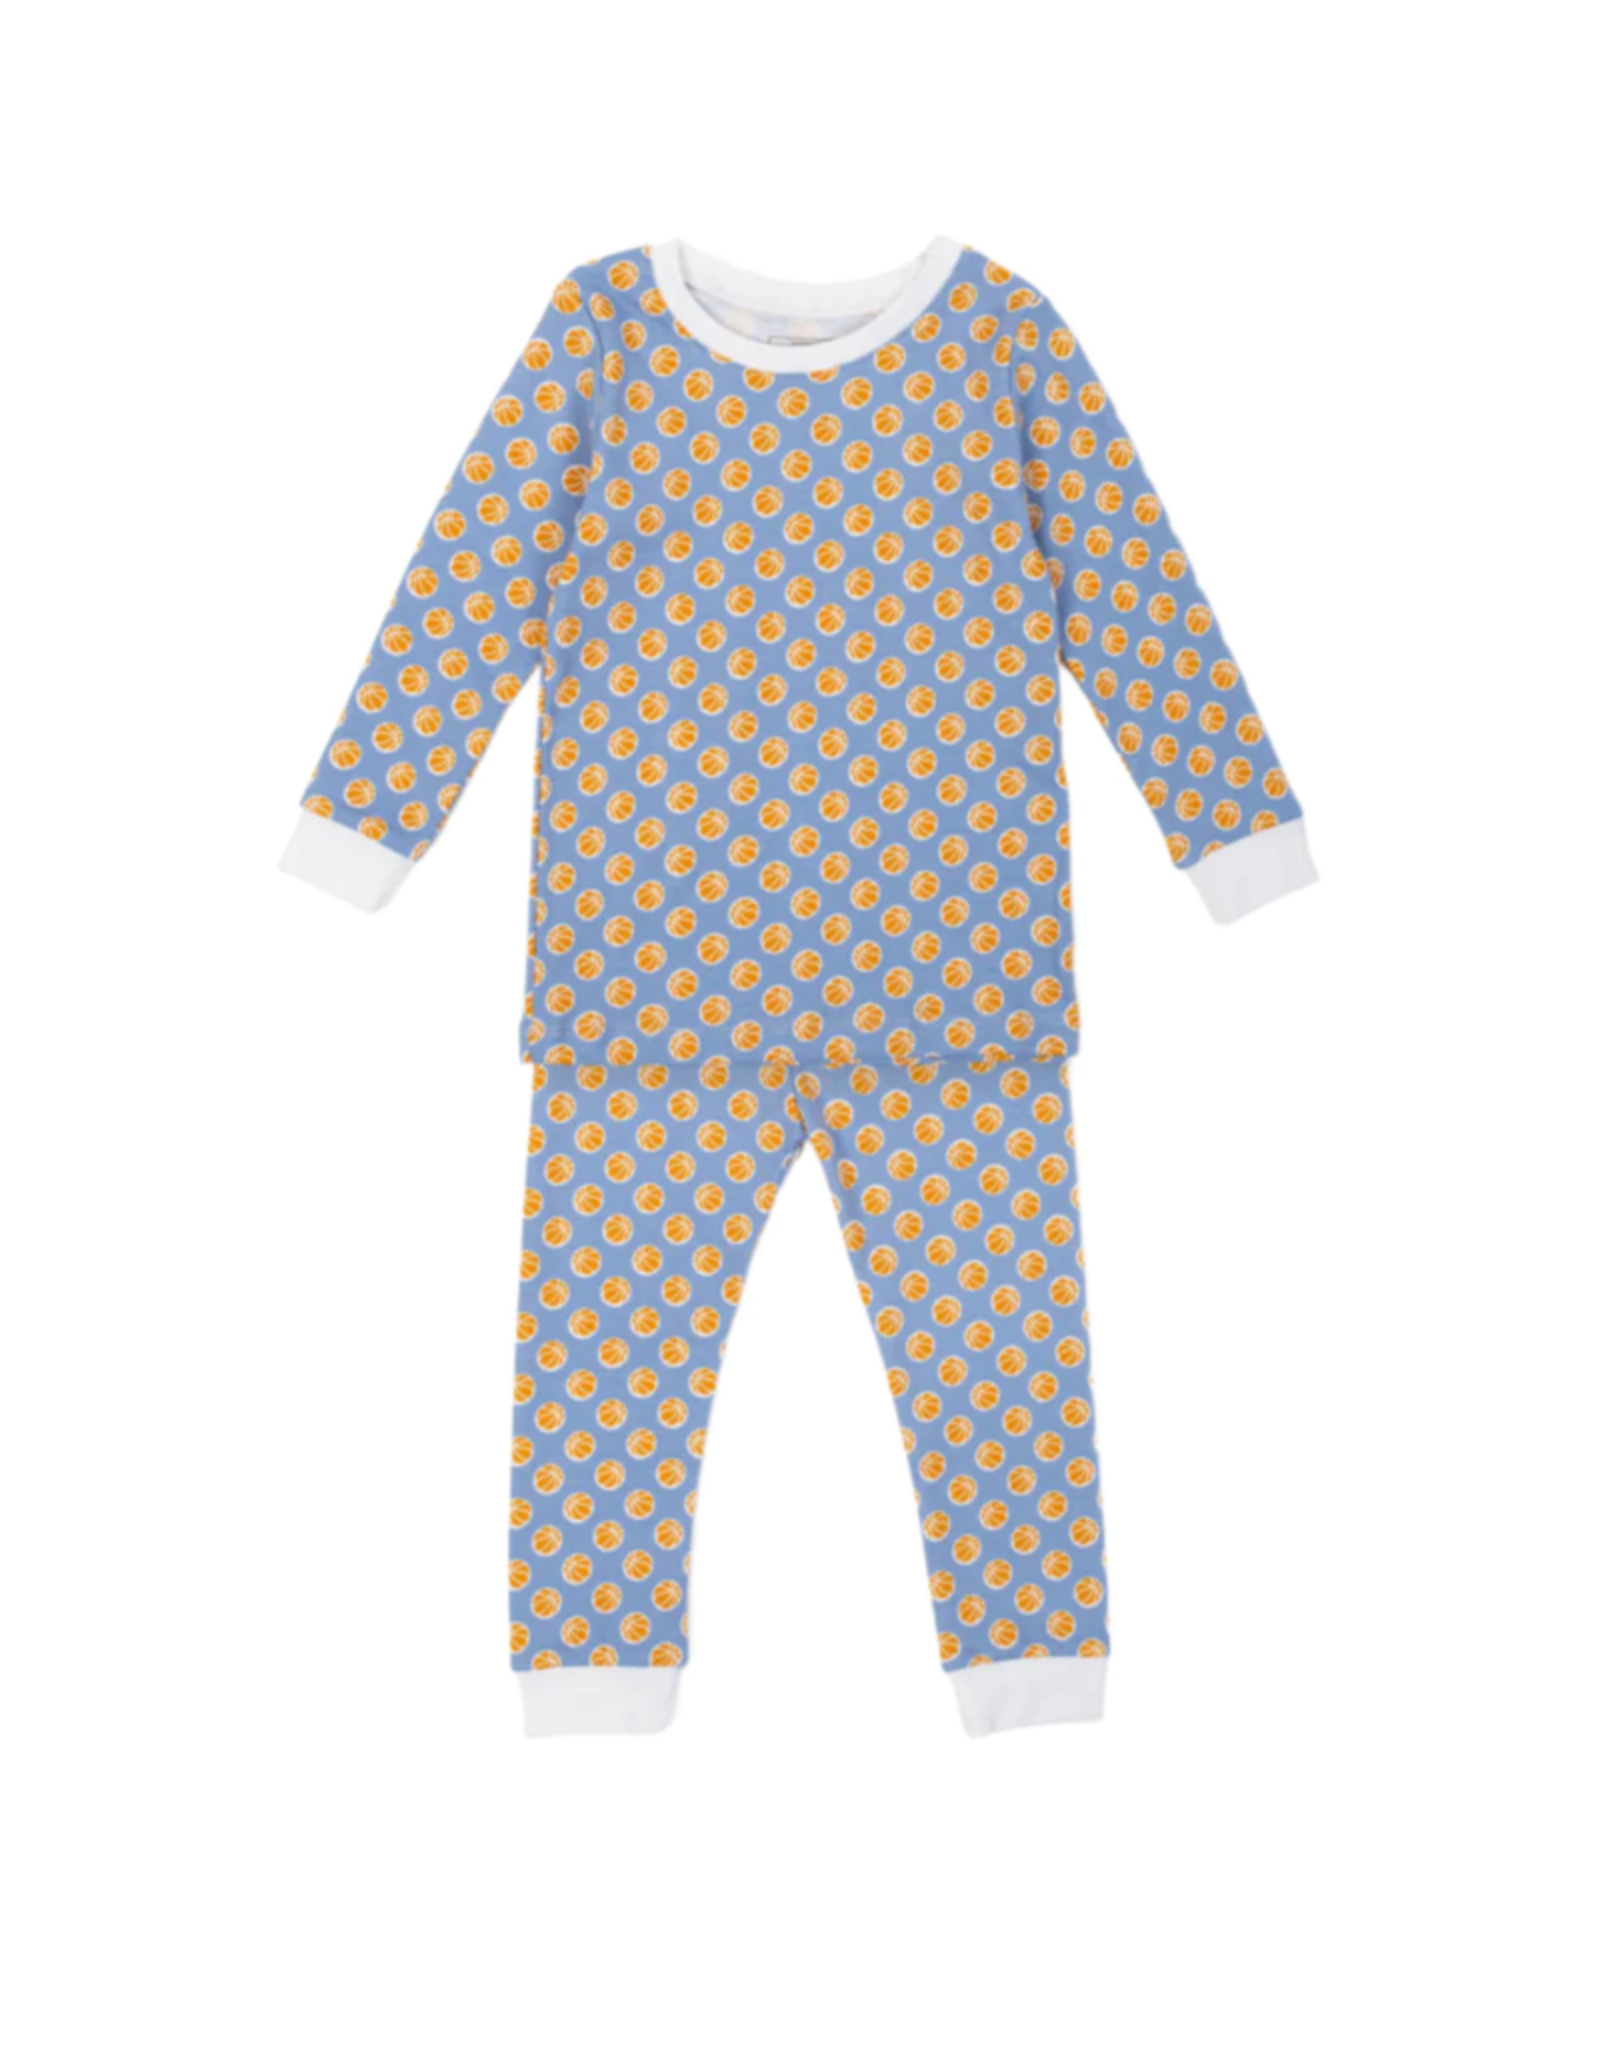 Lila + Hayes Grayson Pajama Set, Hoop It Up Blue